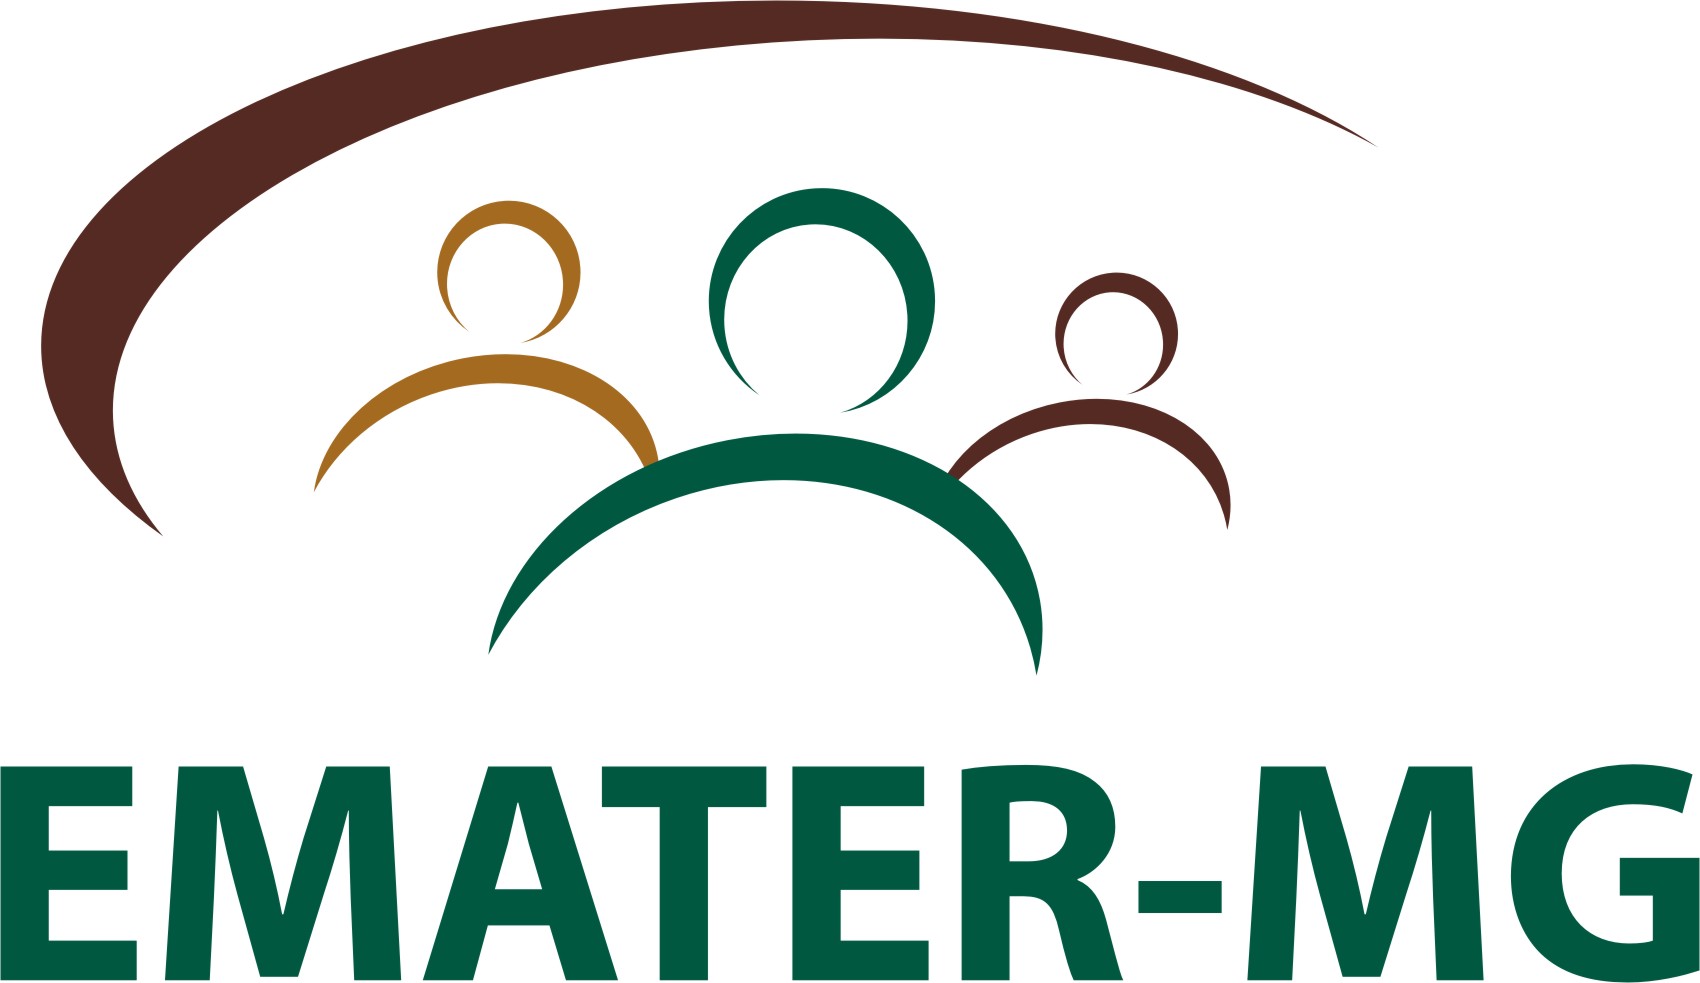 EMATER Logo photo - 1